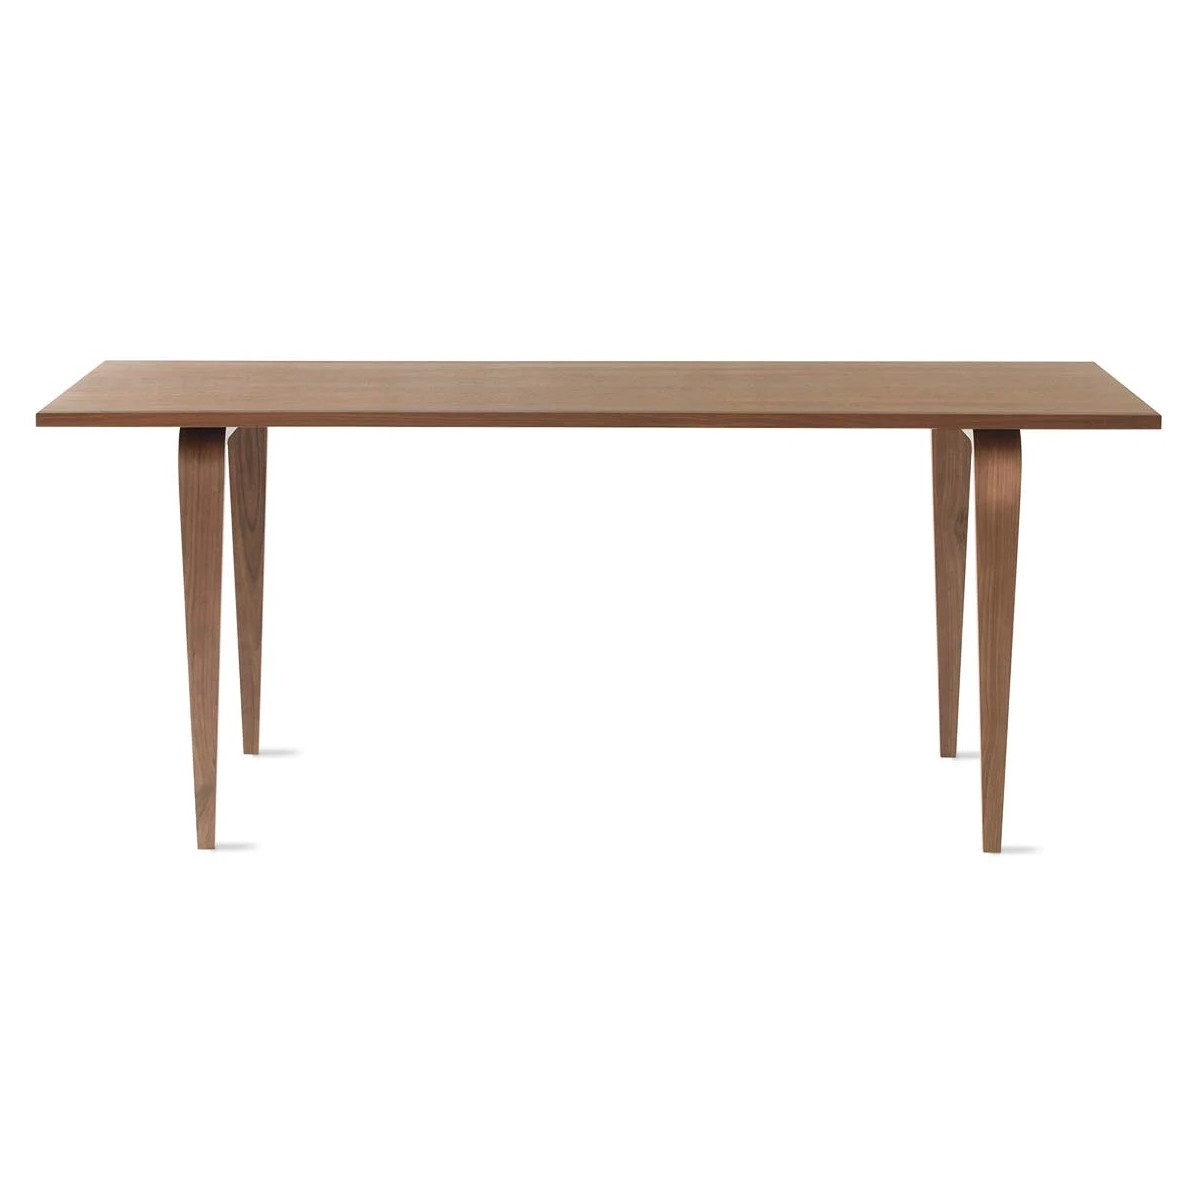 182,8 x 86,4 cm – Table Rectangle – Noyer naturel